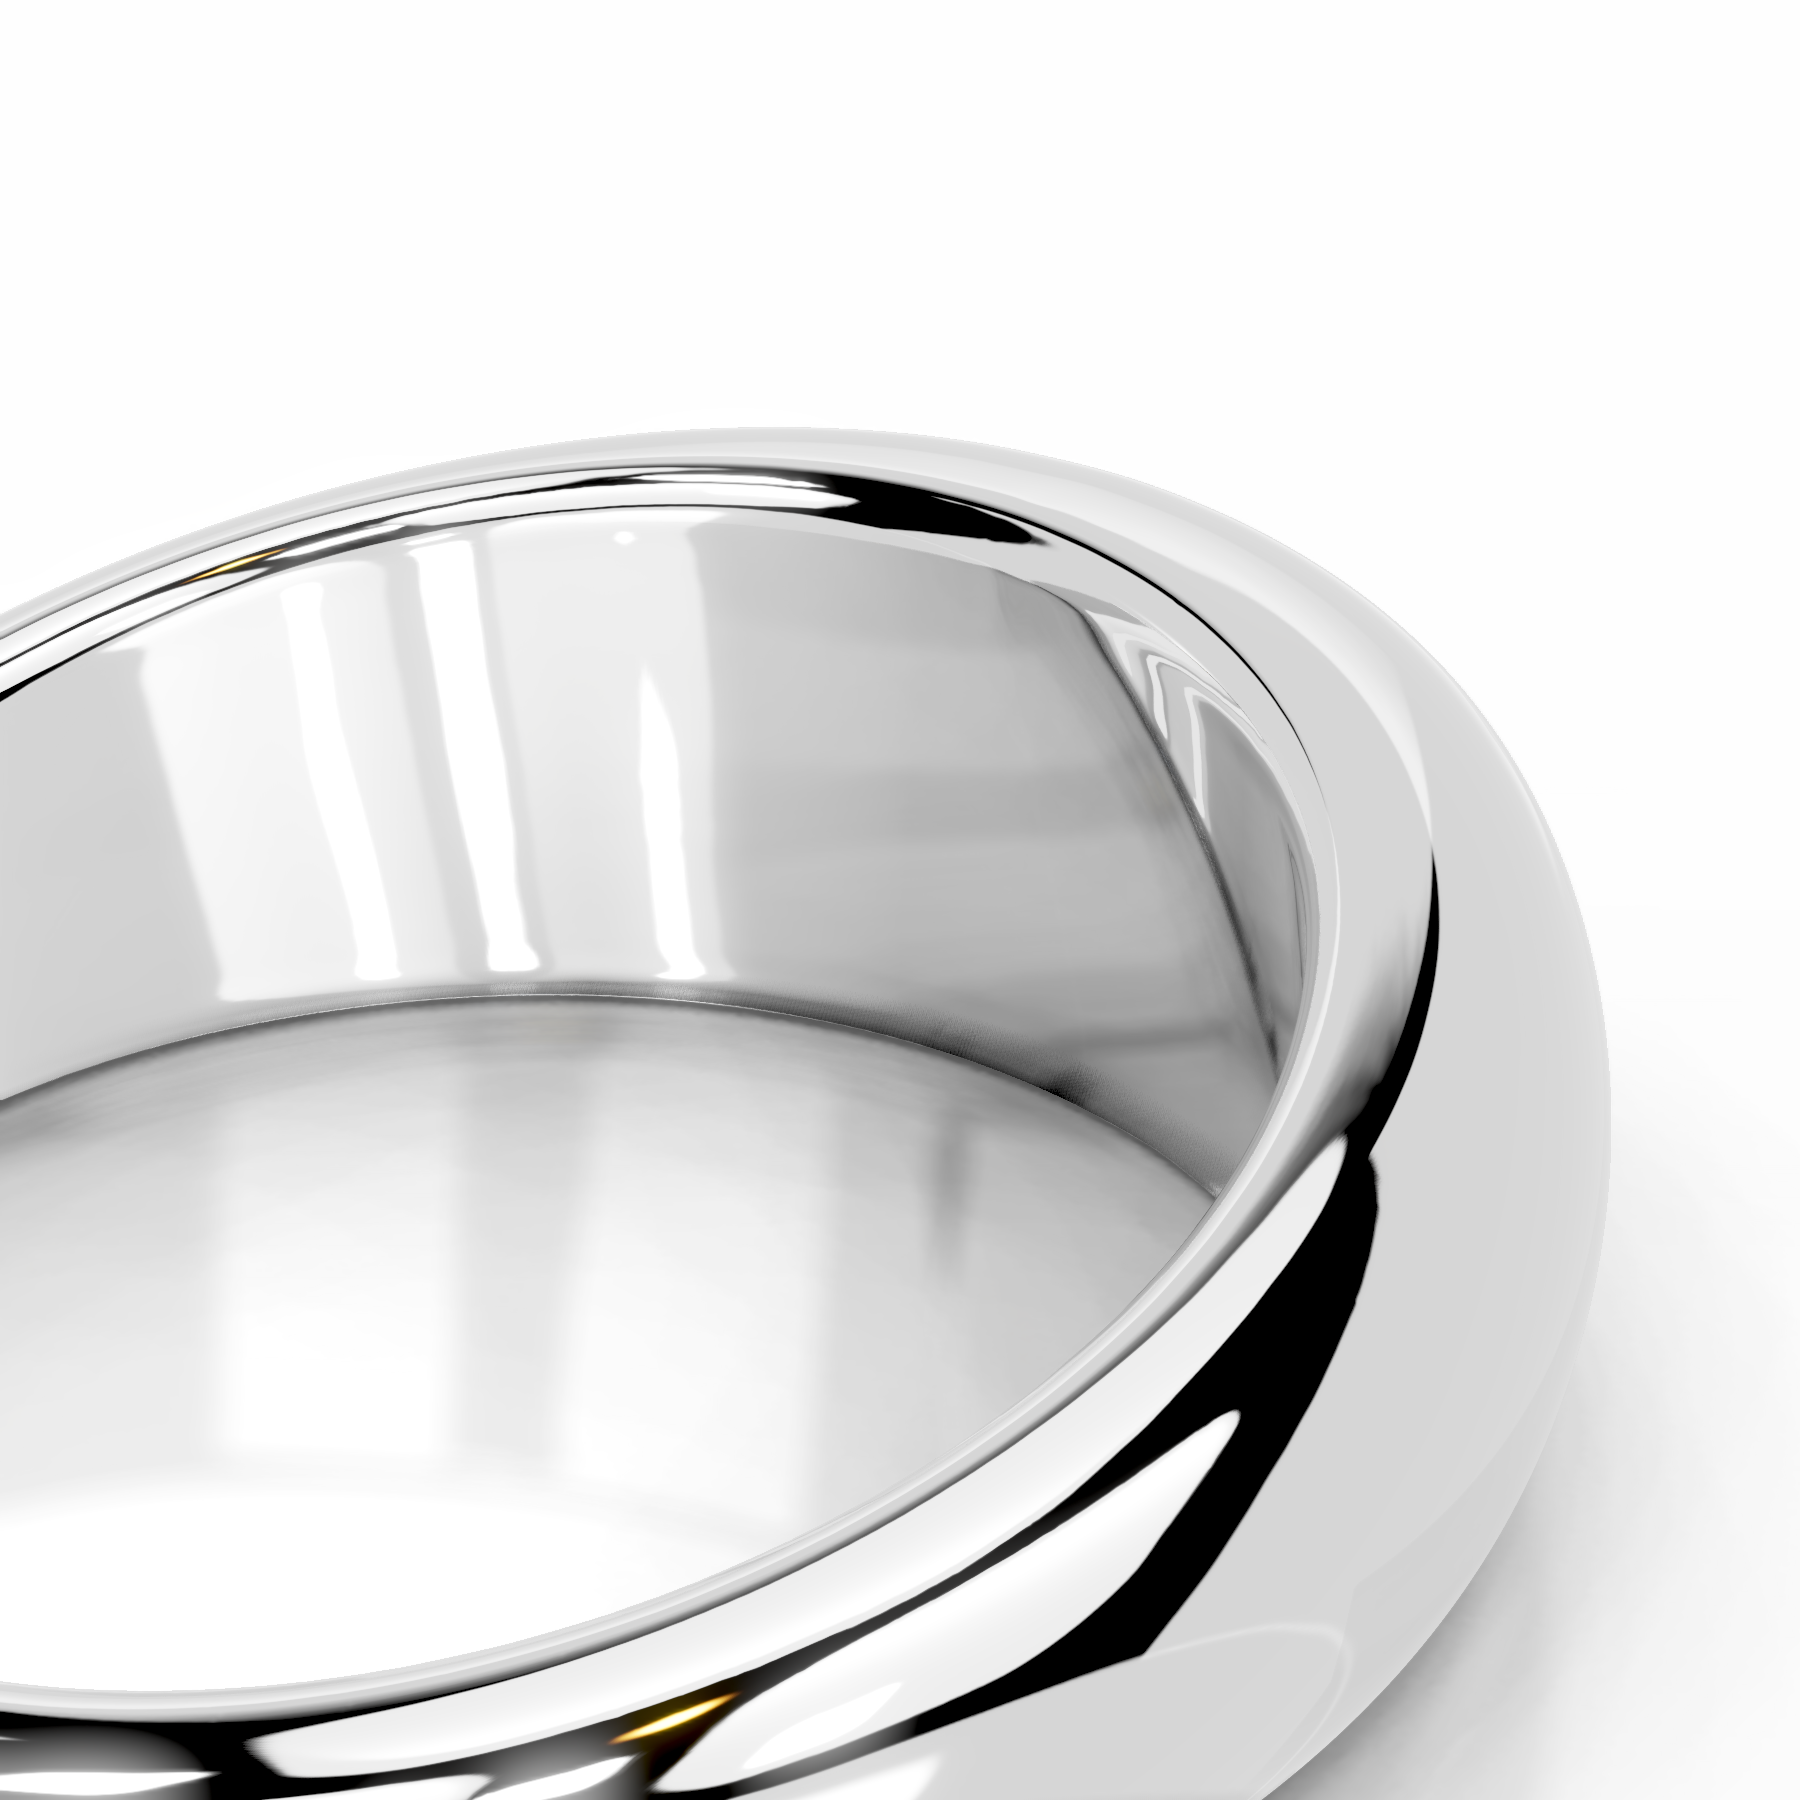 Amari Lab Grown Diamond Ring   (1 Carat) -Platinum